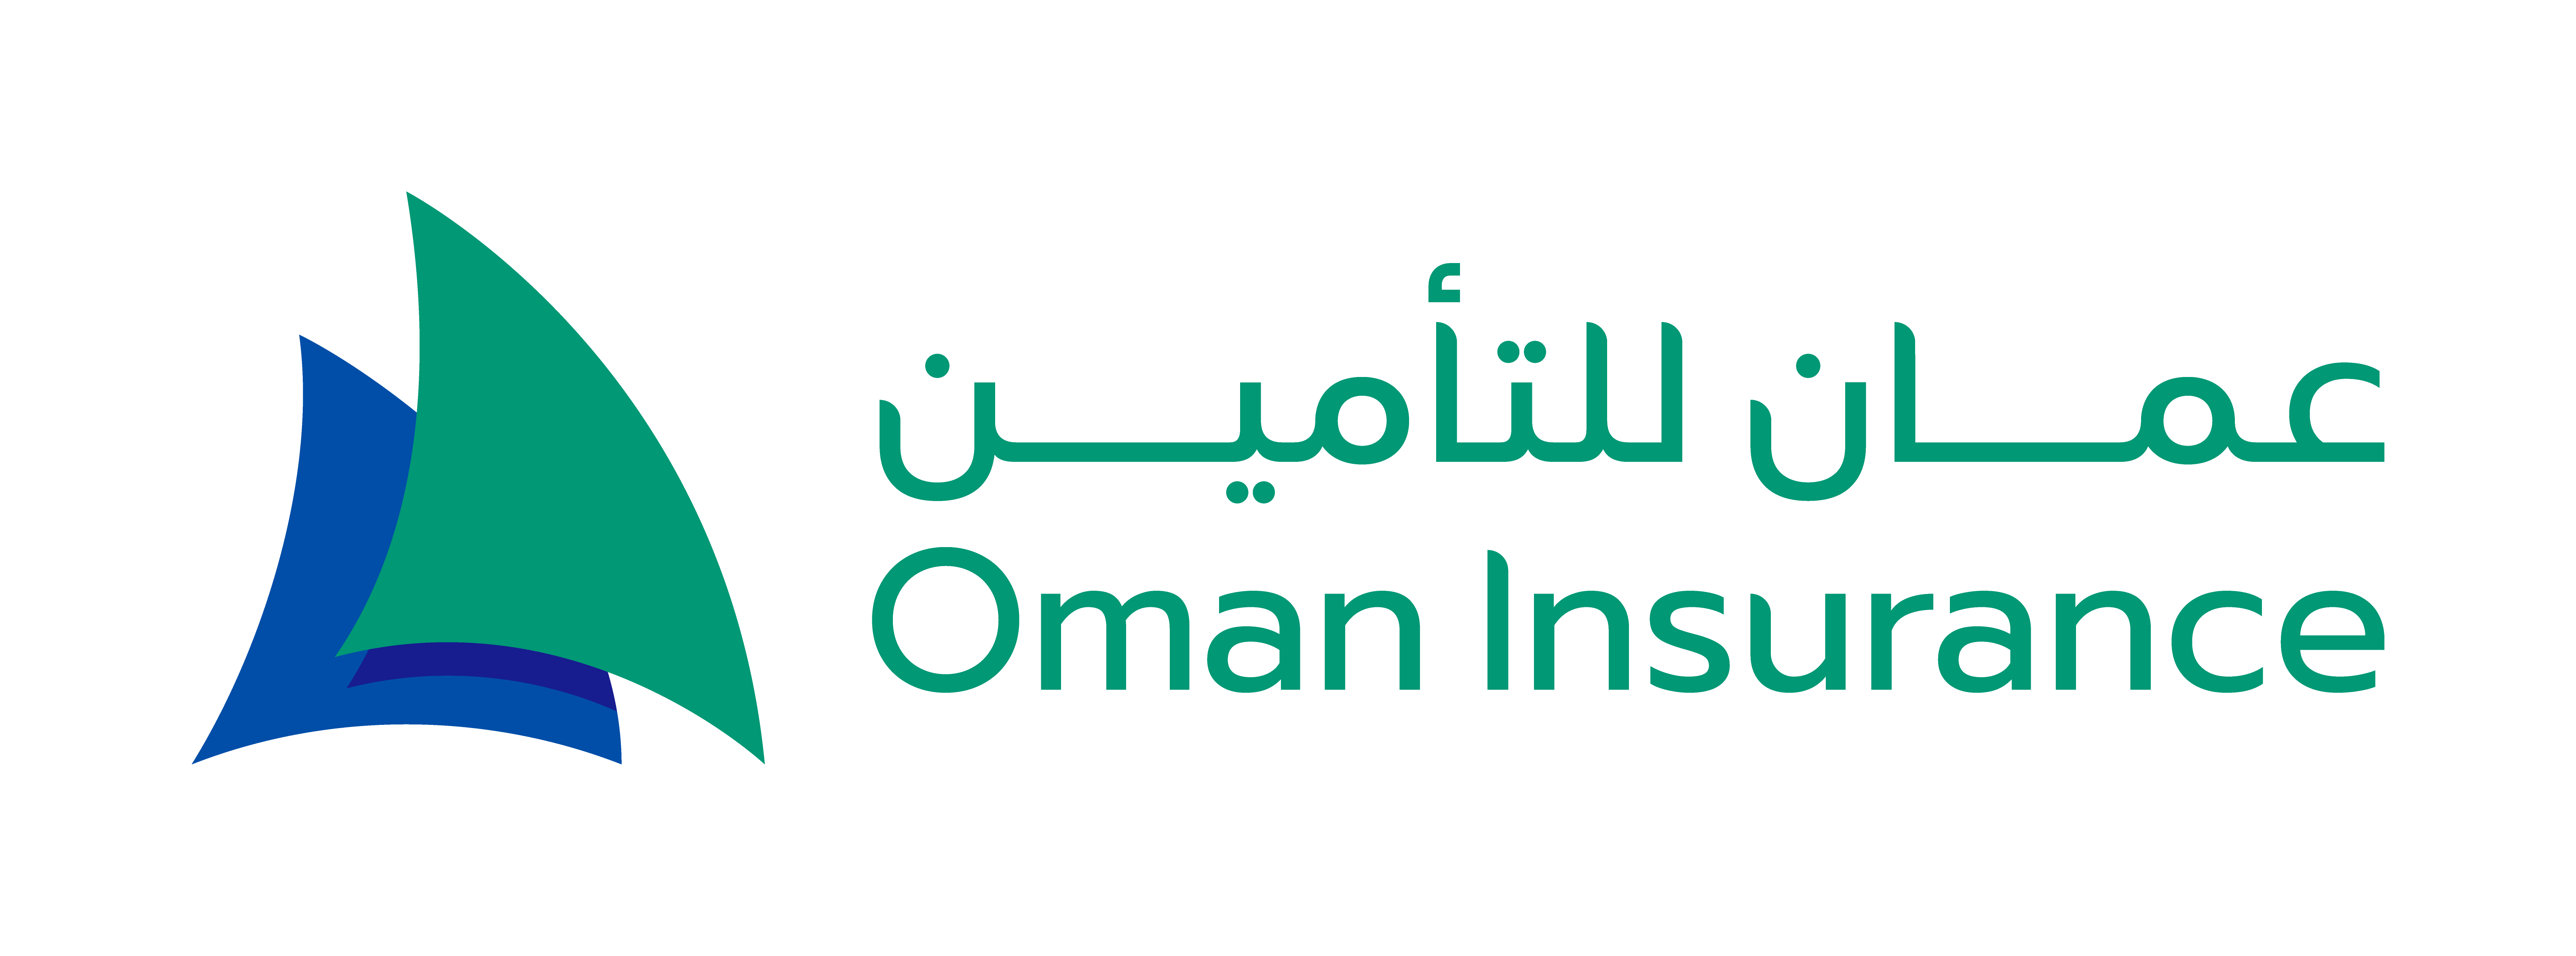 Oman Insurance Dubai